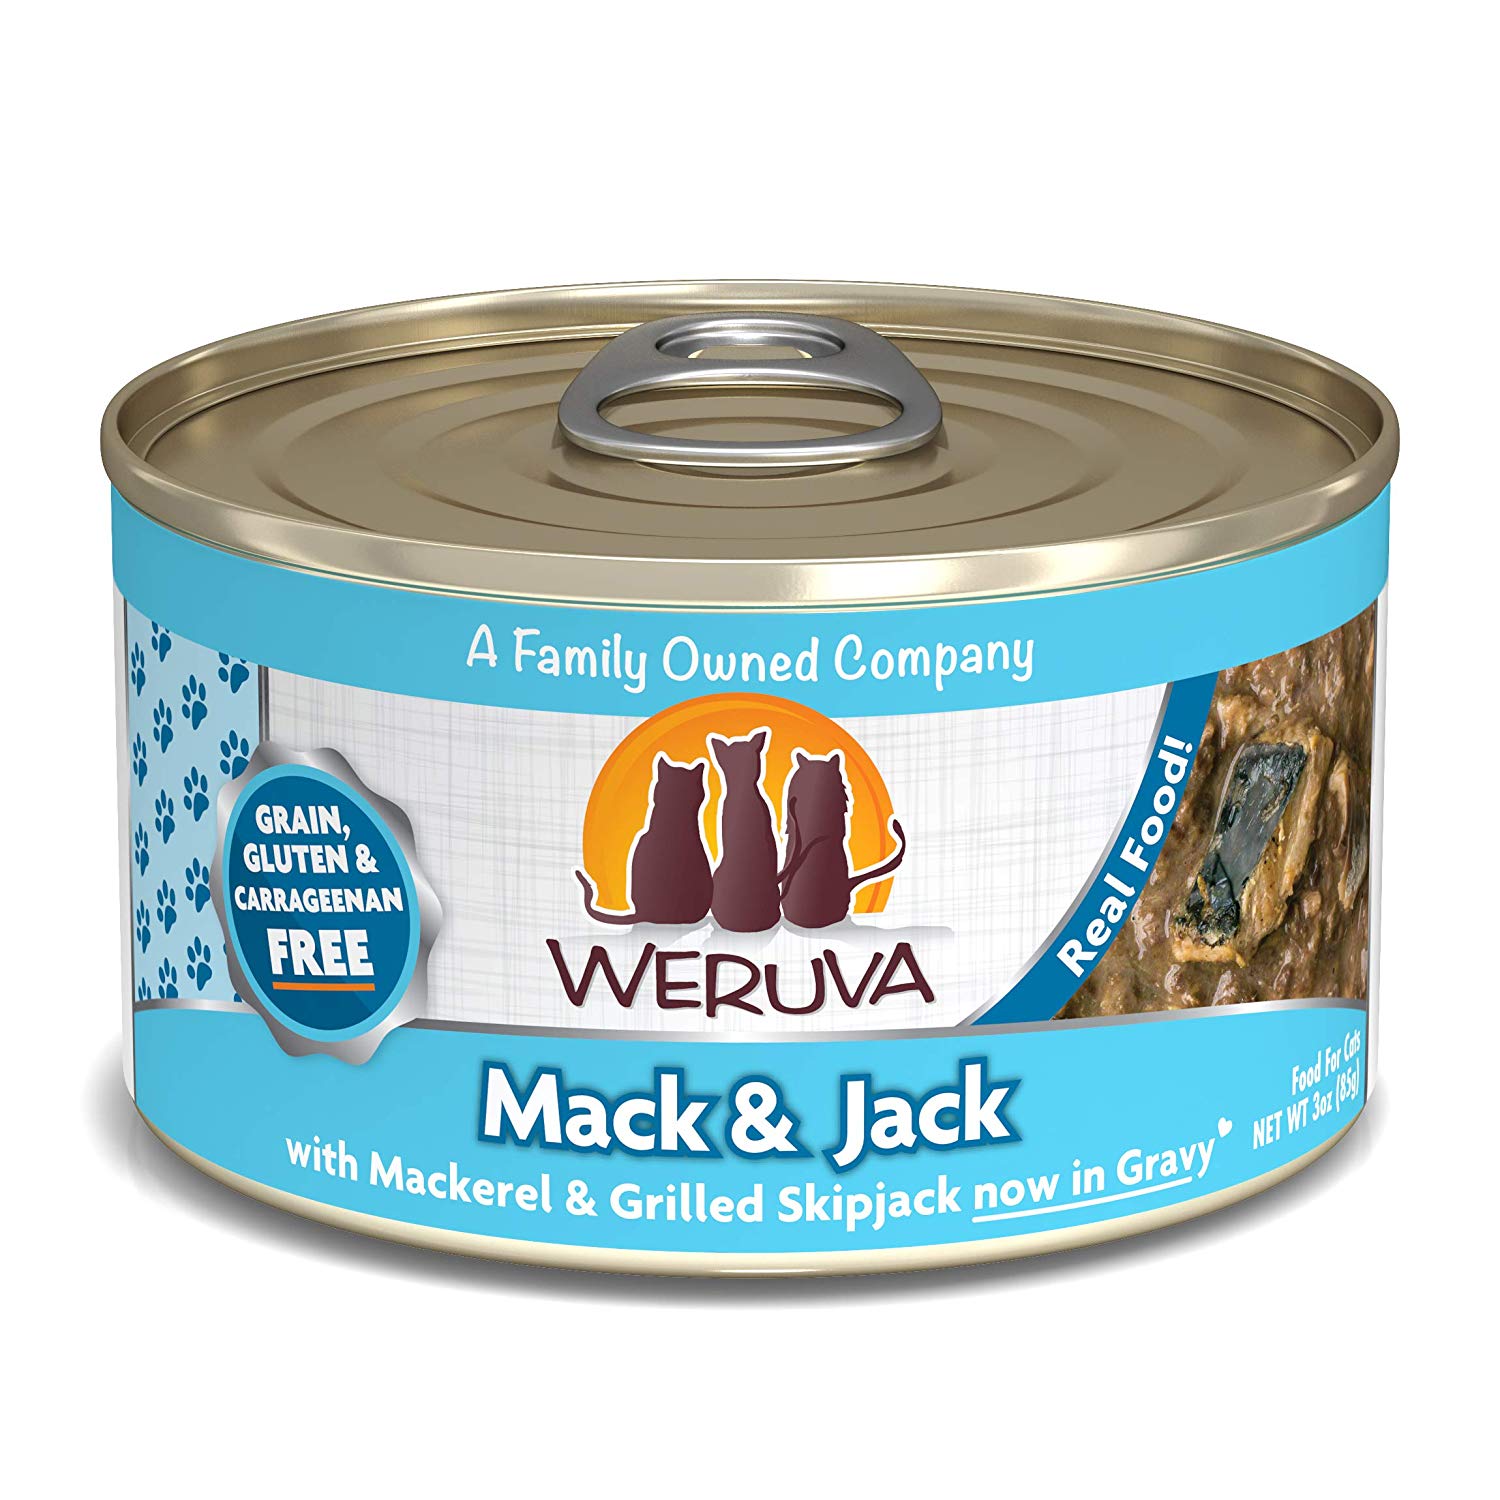 唯美味主食貓罐-麥克與傑克
WERUVA-Mack and Jack With Mackerel and Grilled Skipjack